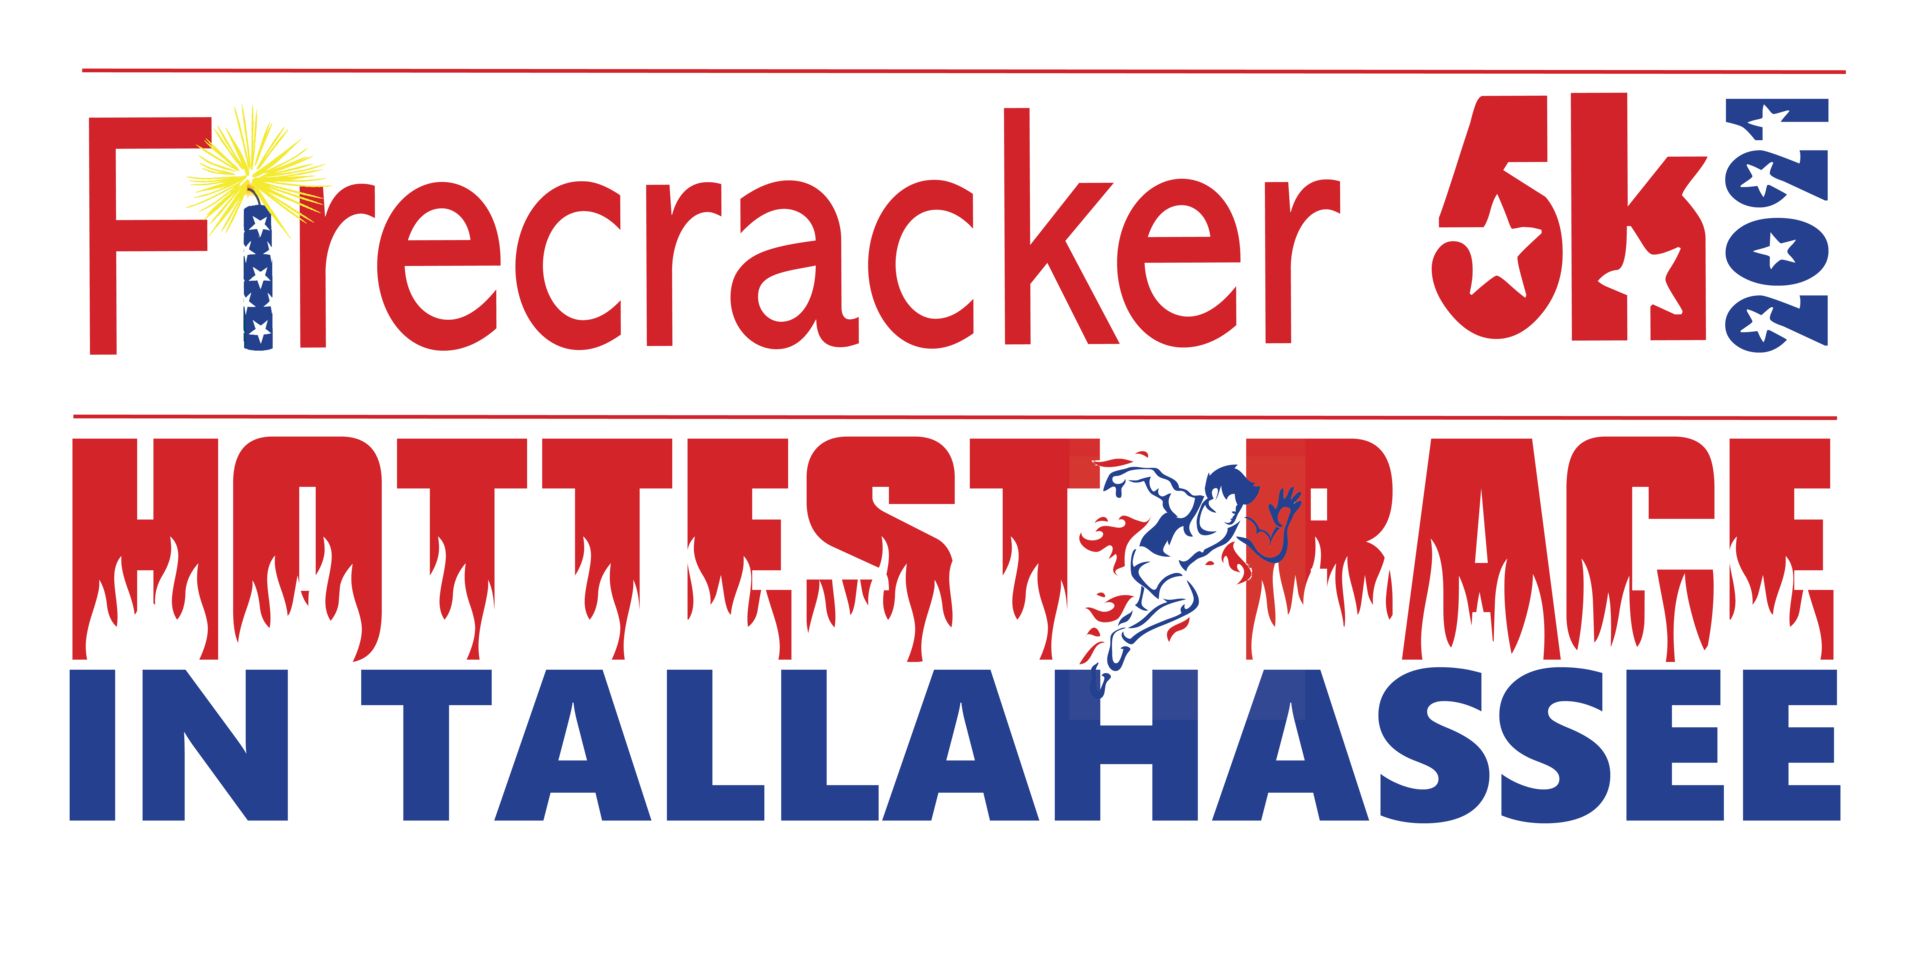 Firecracker 5k and 1-Mile Fun Run, Tallahassee, Florida, United States